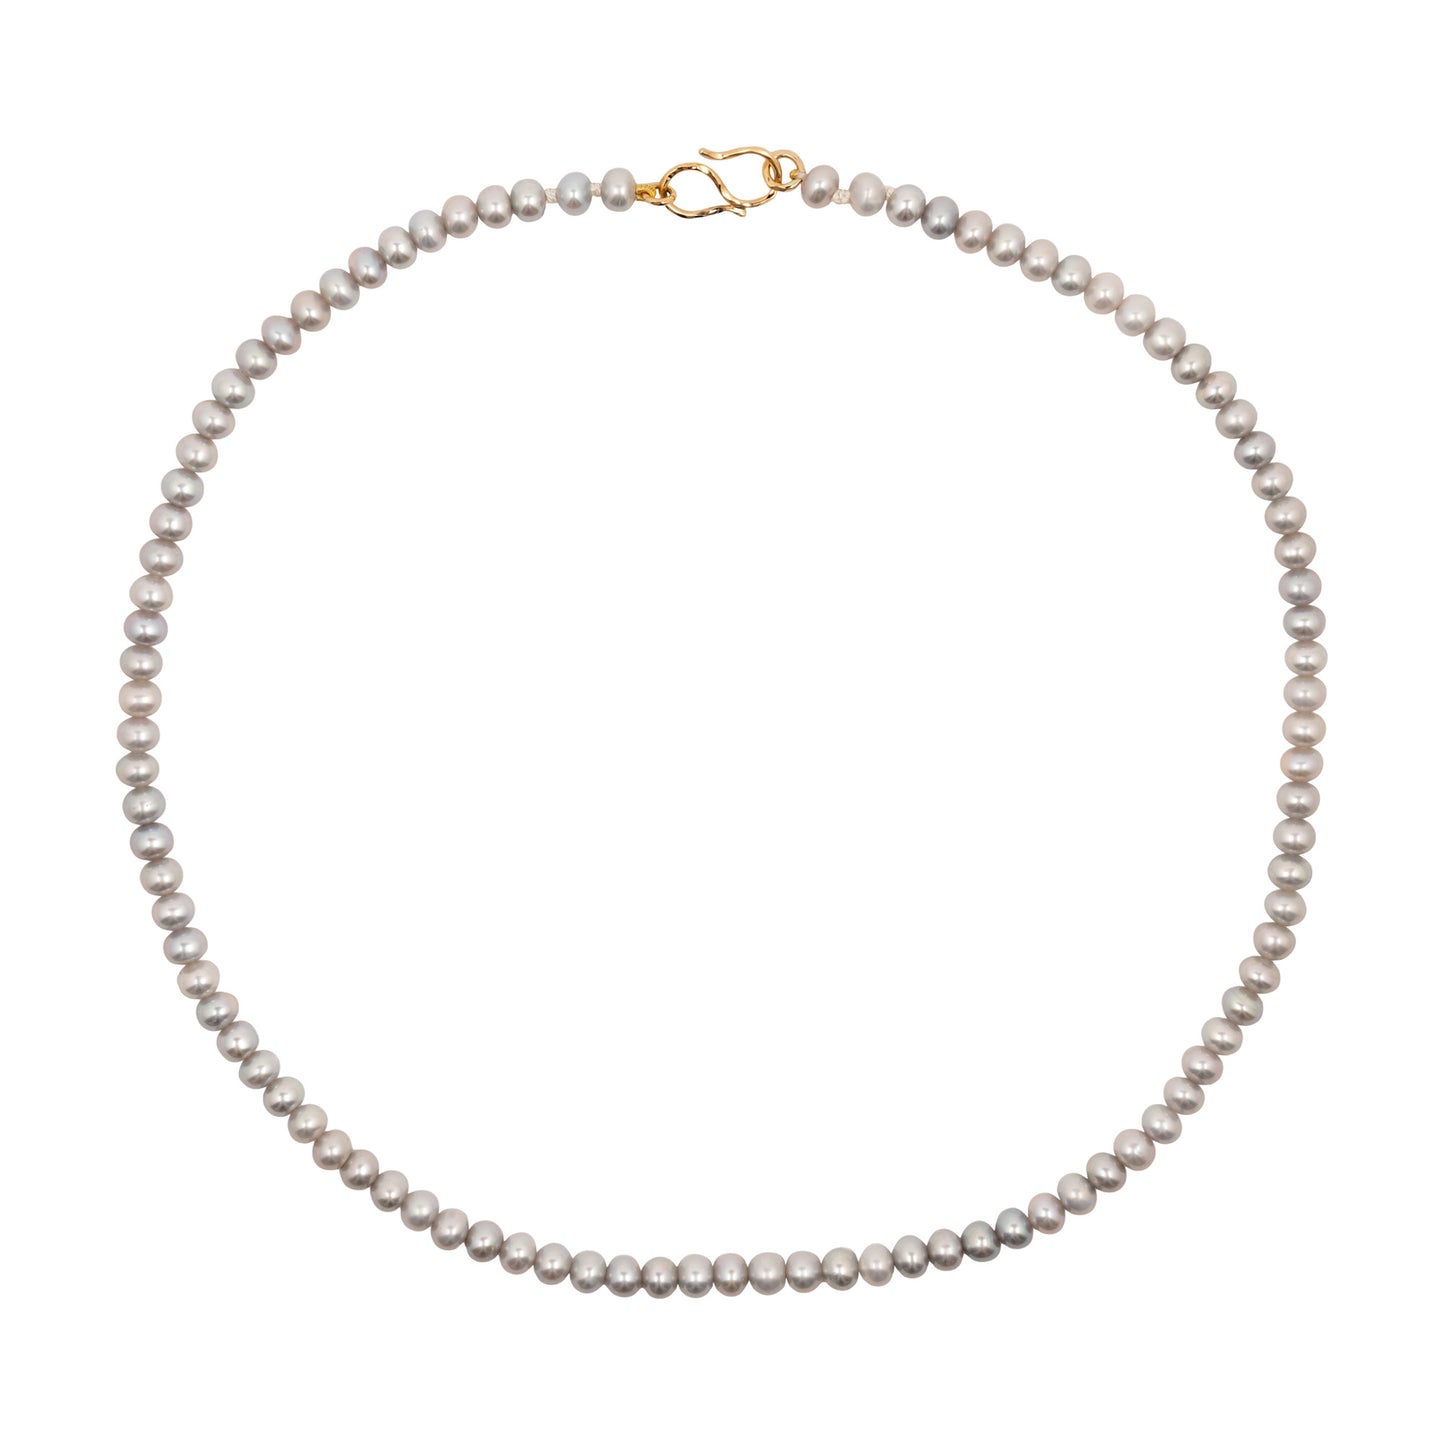 Luna Fresco pearl necklace